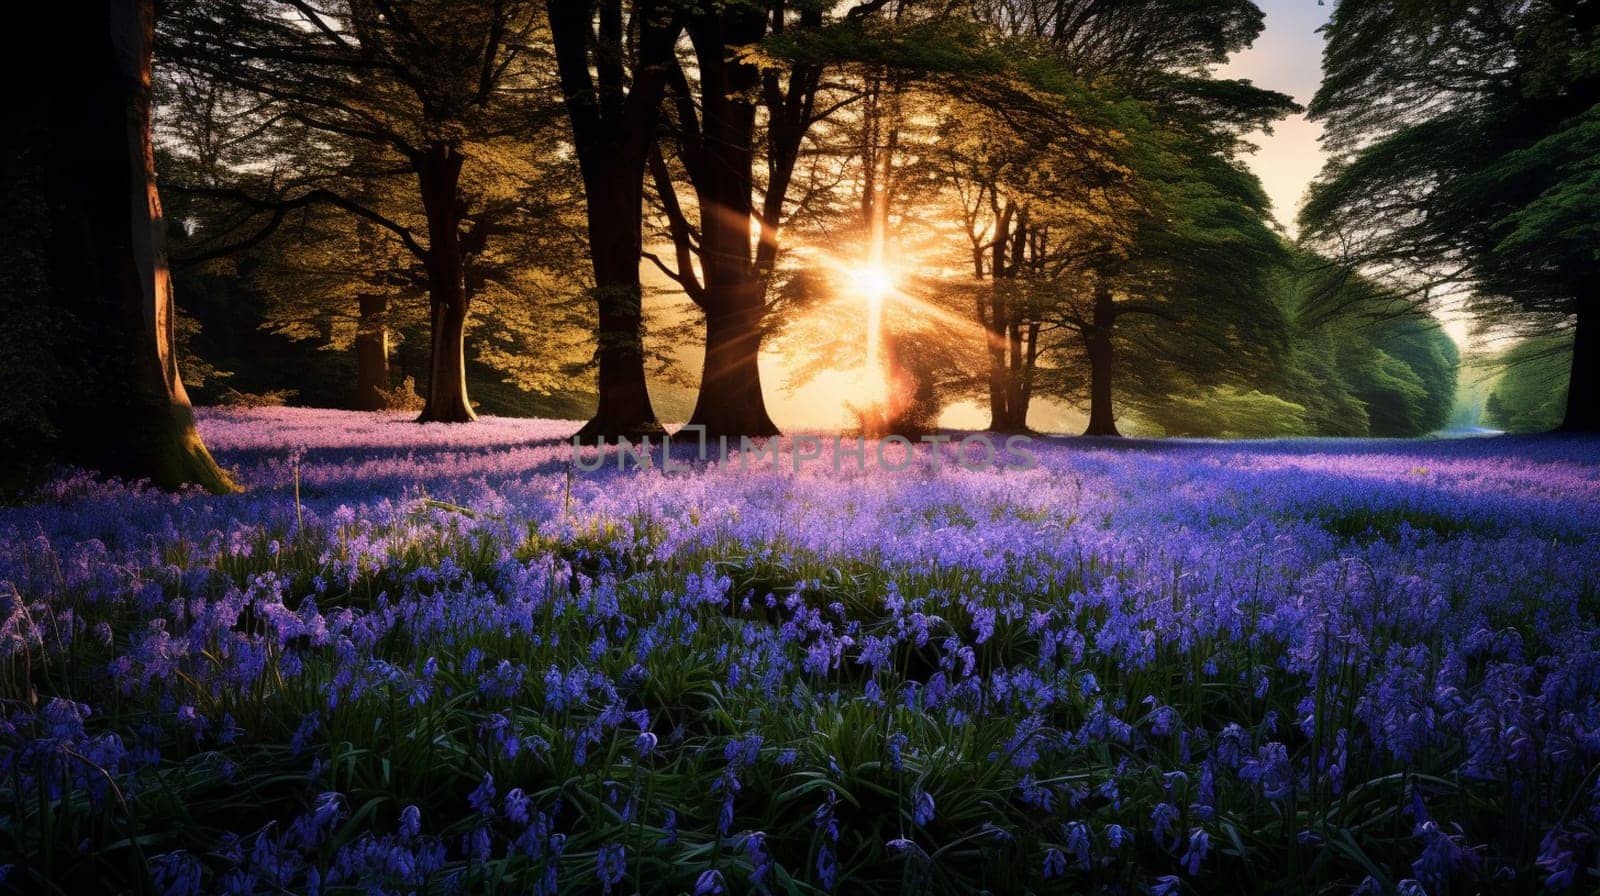 Sunlight filters through trees onto a carpet of bluebells in a serene woodland scene by kizuneko